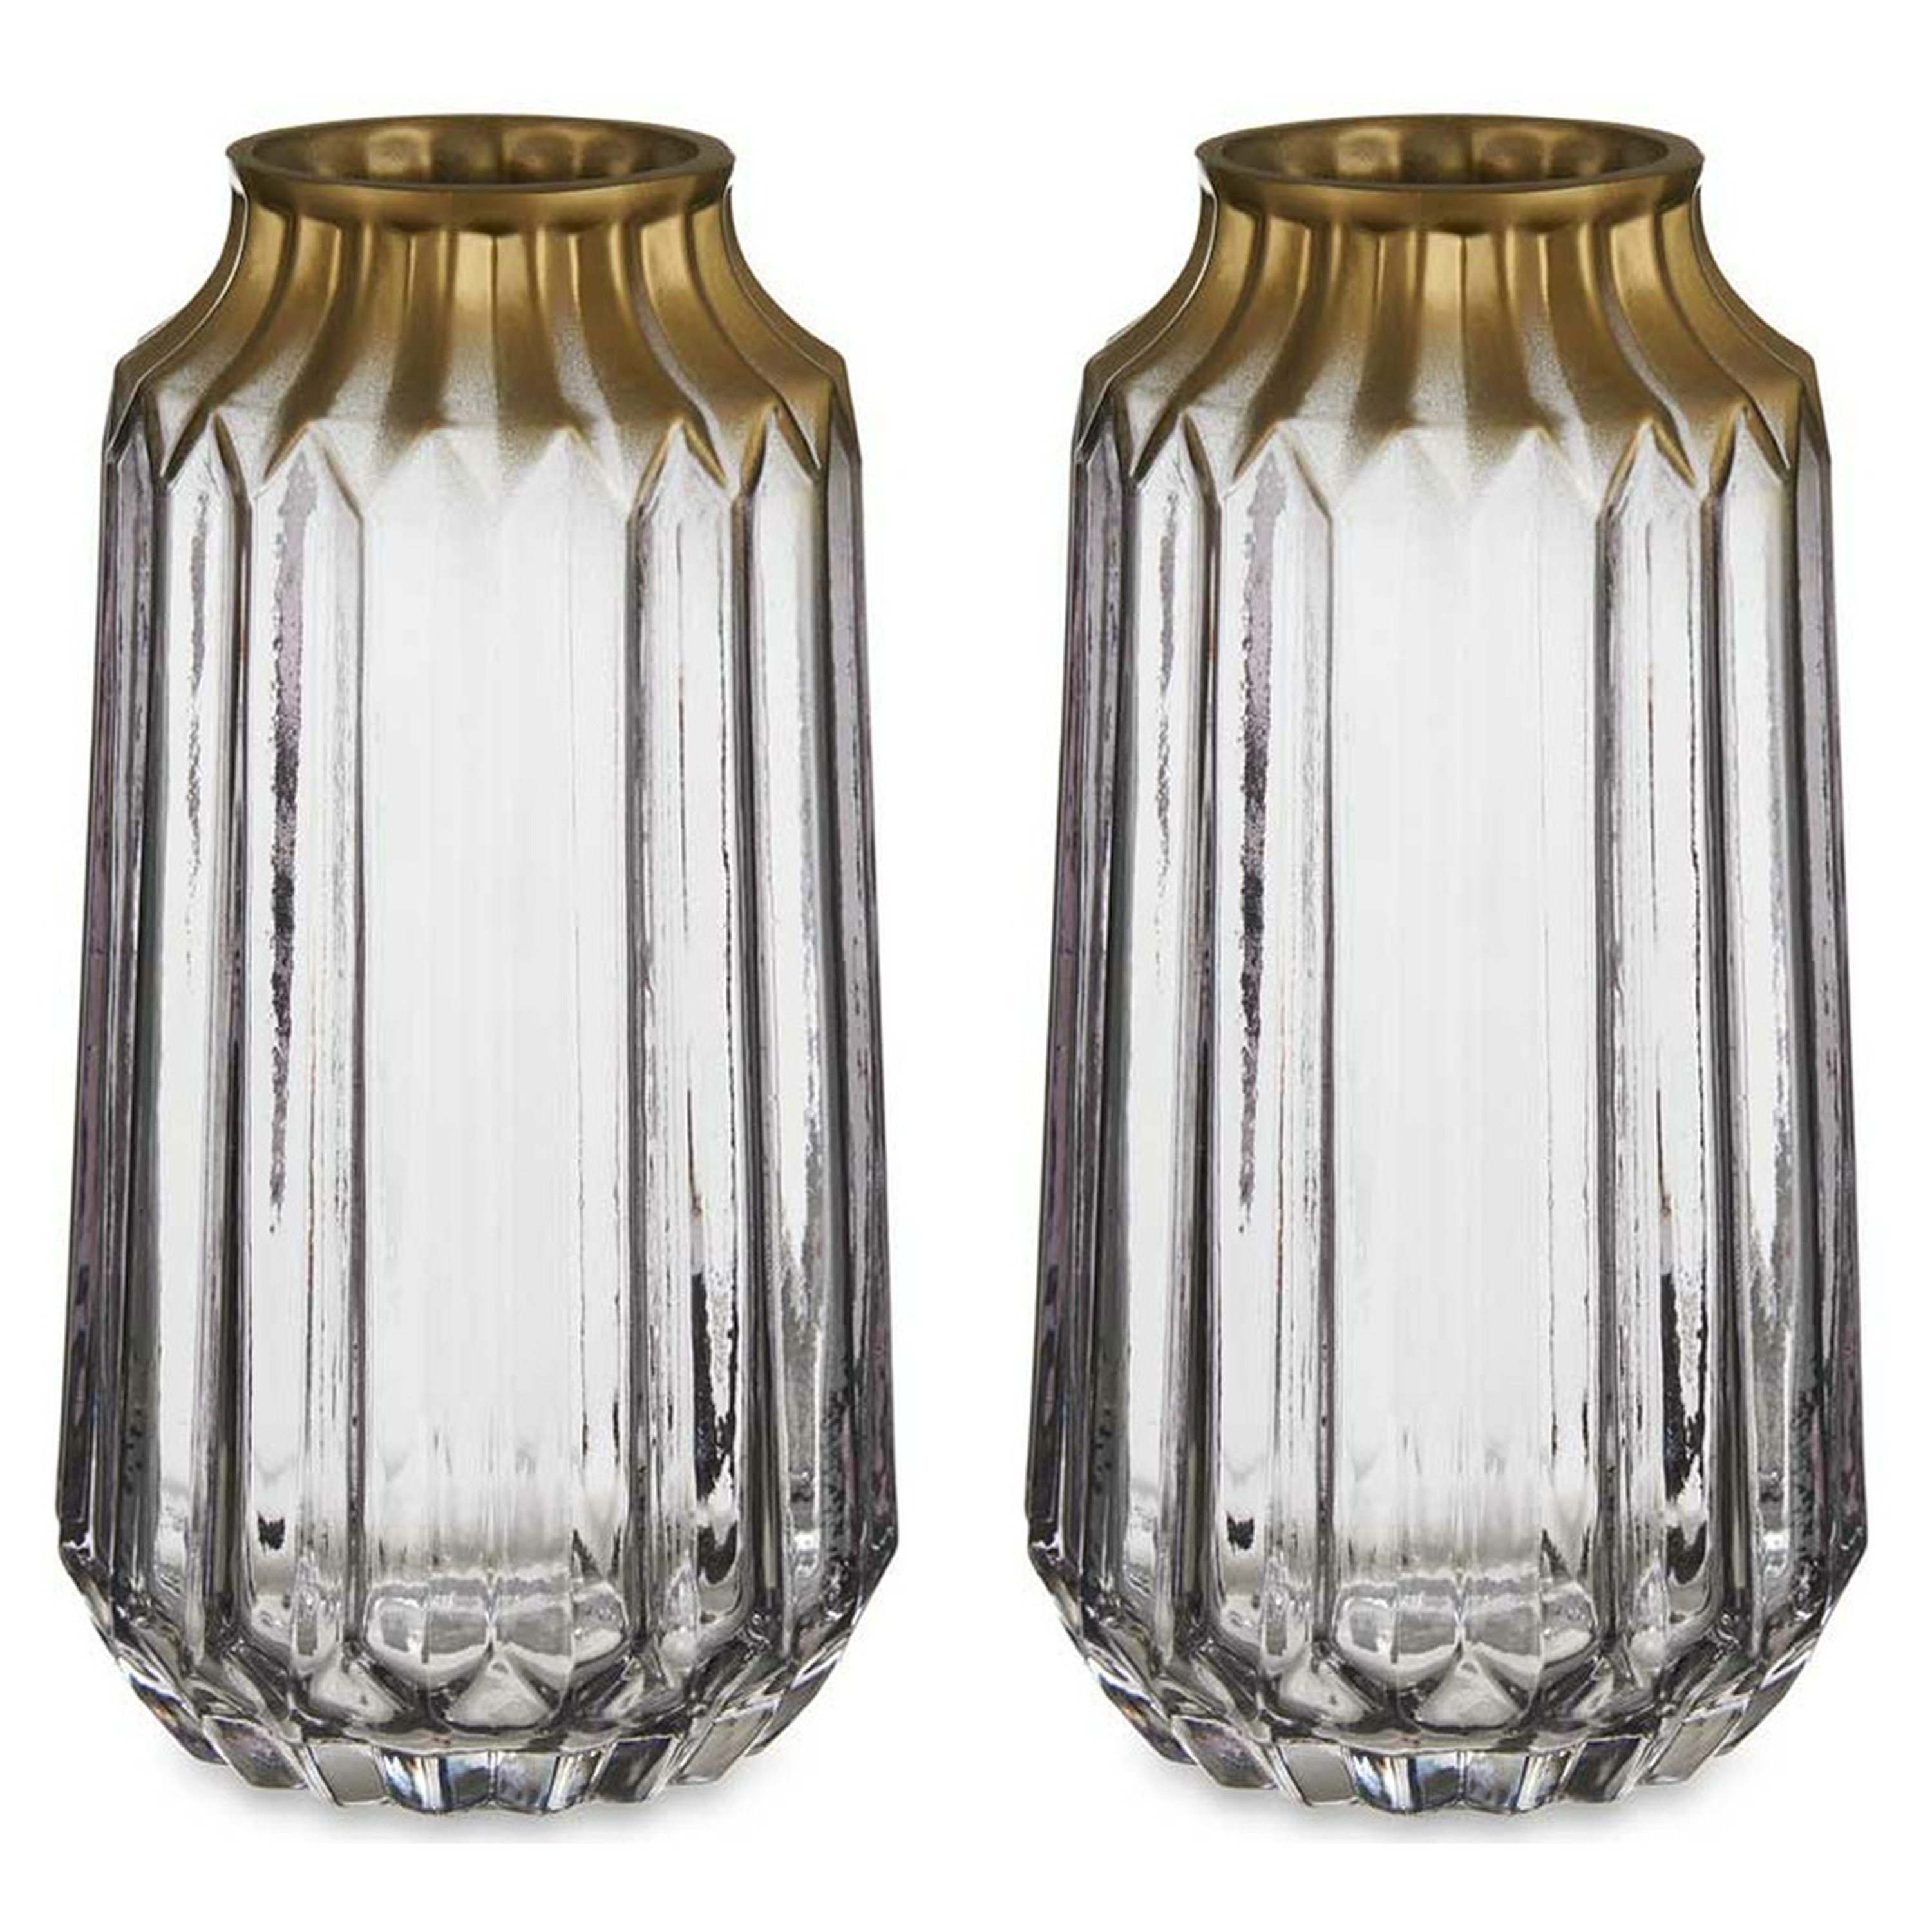 Giftdecor - Bloemenvazen 2x stuks - Glas - grijs transparant/goud - 13 x 23 cm